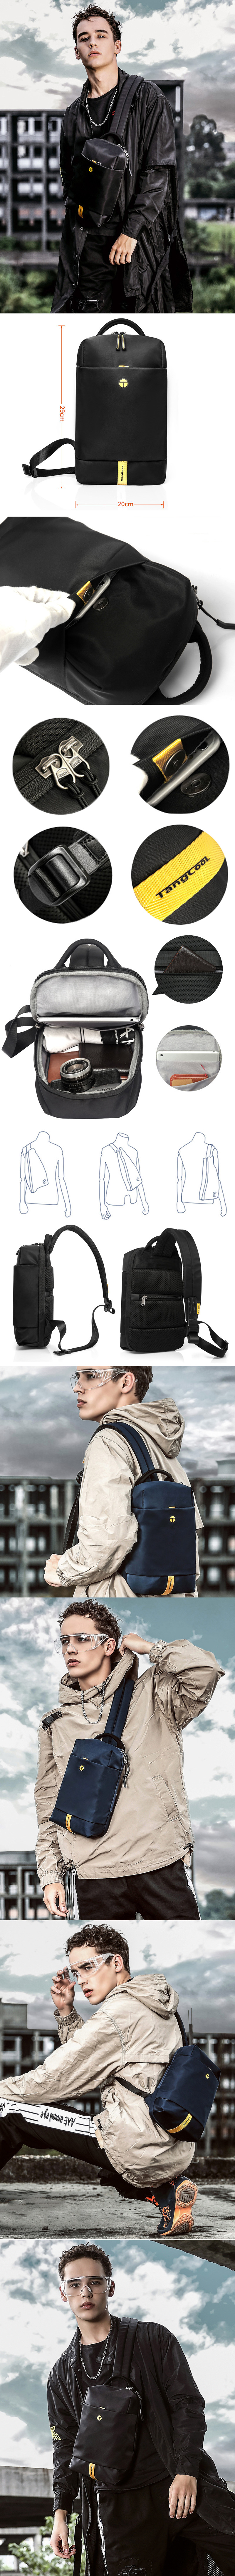 TANGCOOL-6L-Outdoor-Backpack-Sports-Crossbody-Bag-Shoulder-Rucksack-Camping-Hiking-Travel-Bag-1386080-1